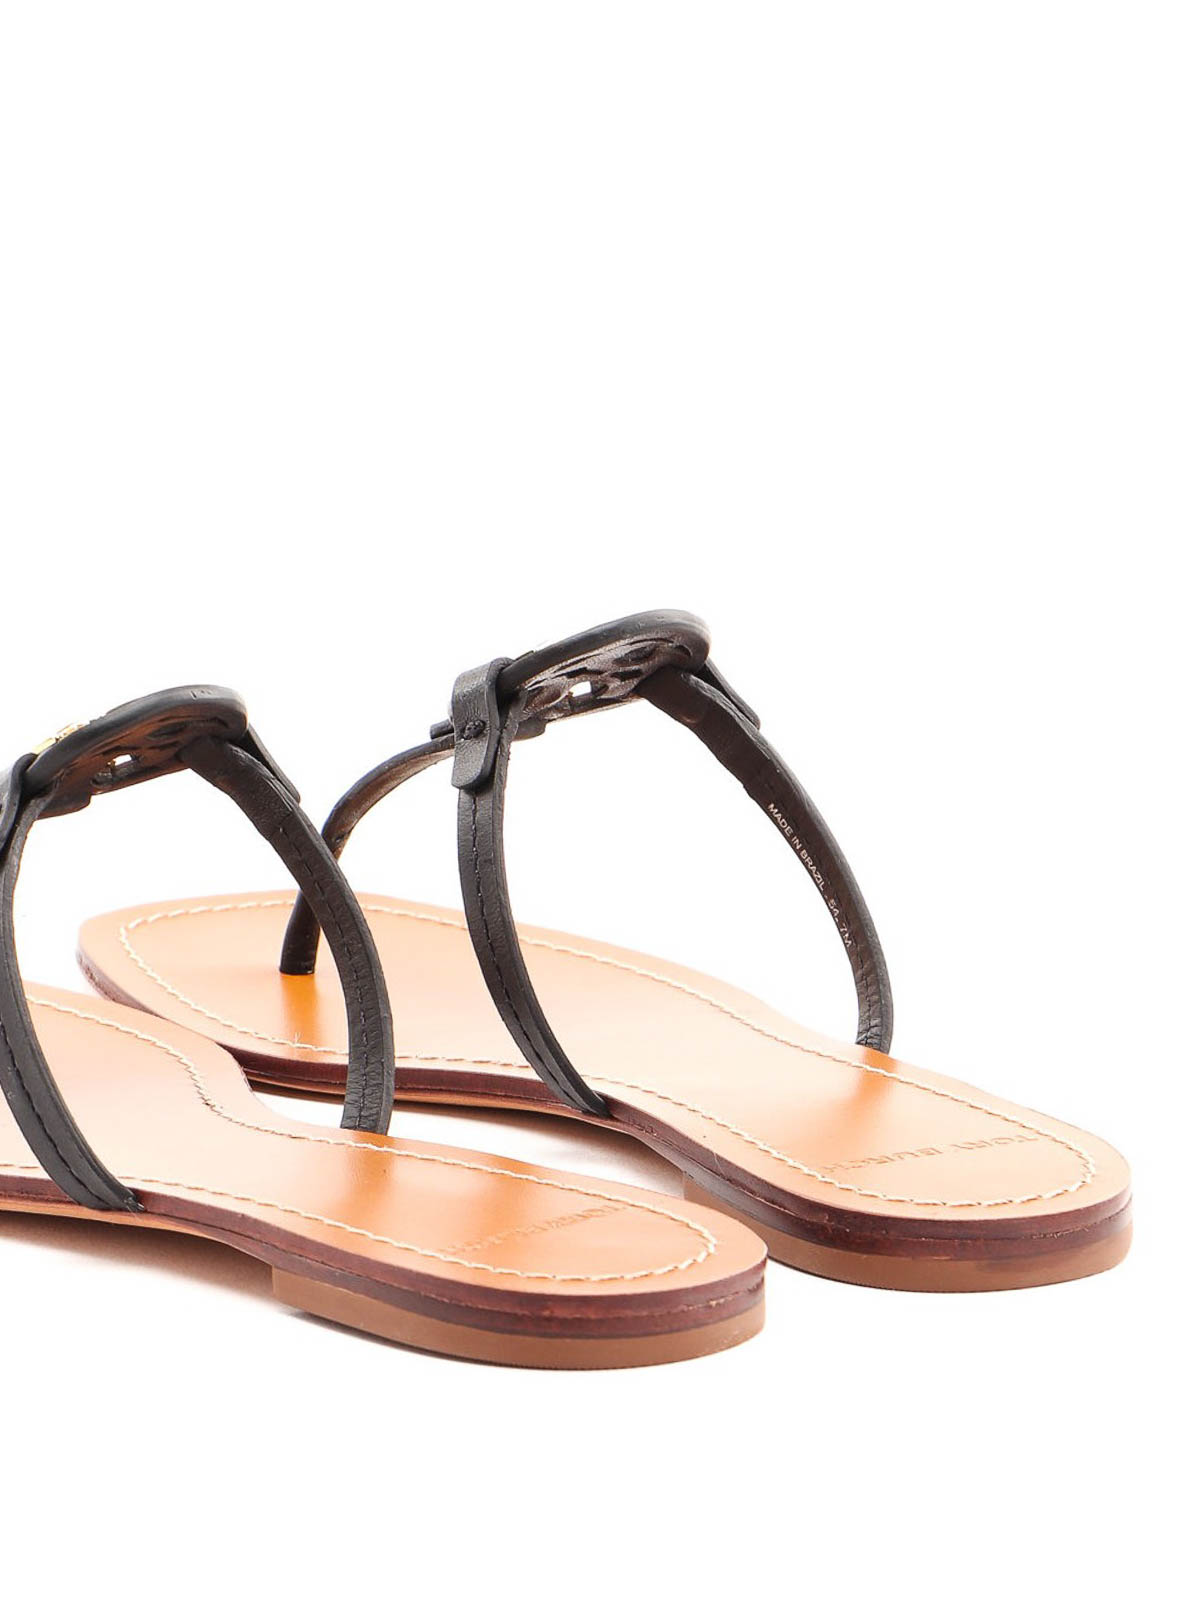 Sandals Tory Burch - Mini Miller thong sandals - 57831006 